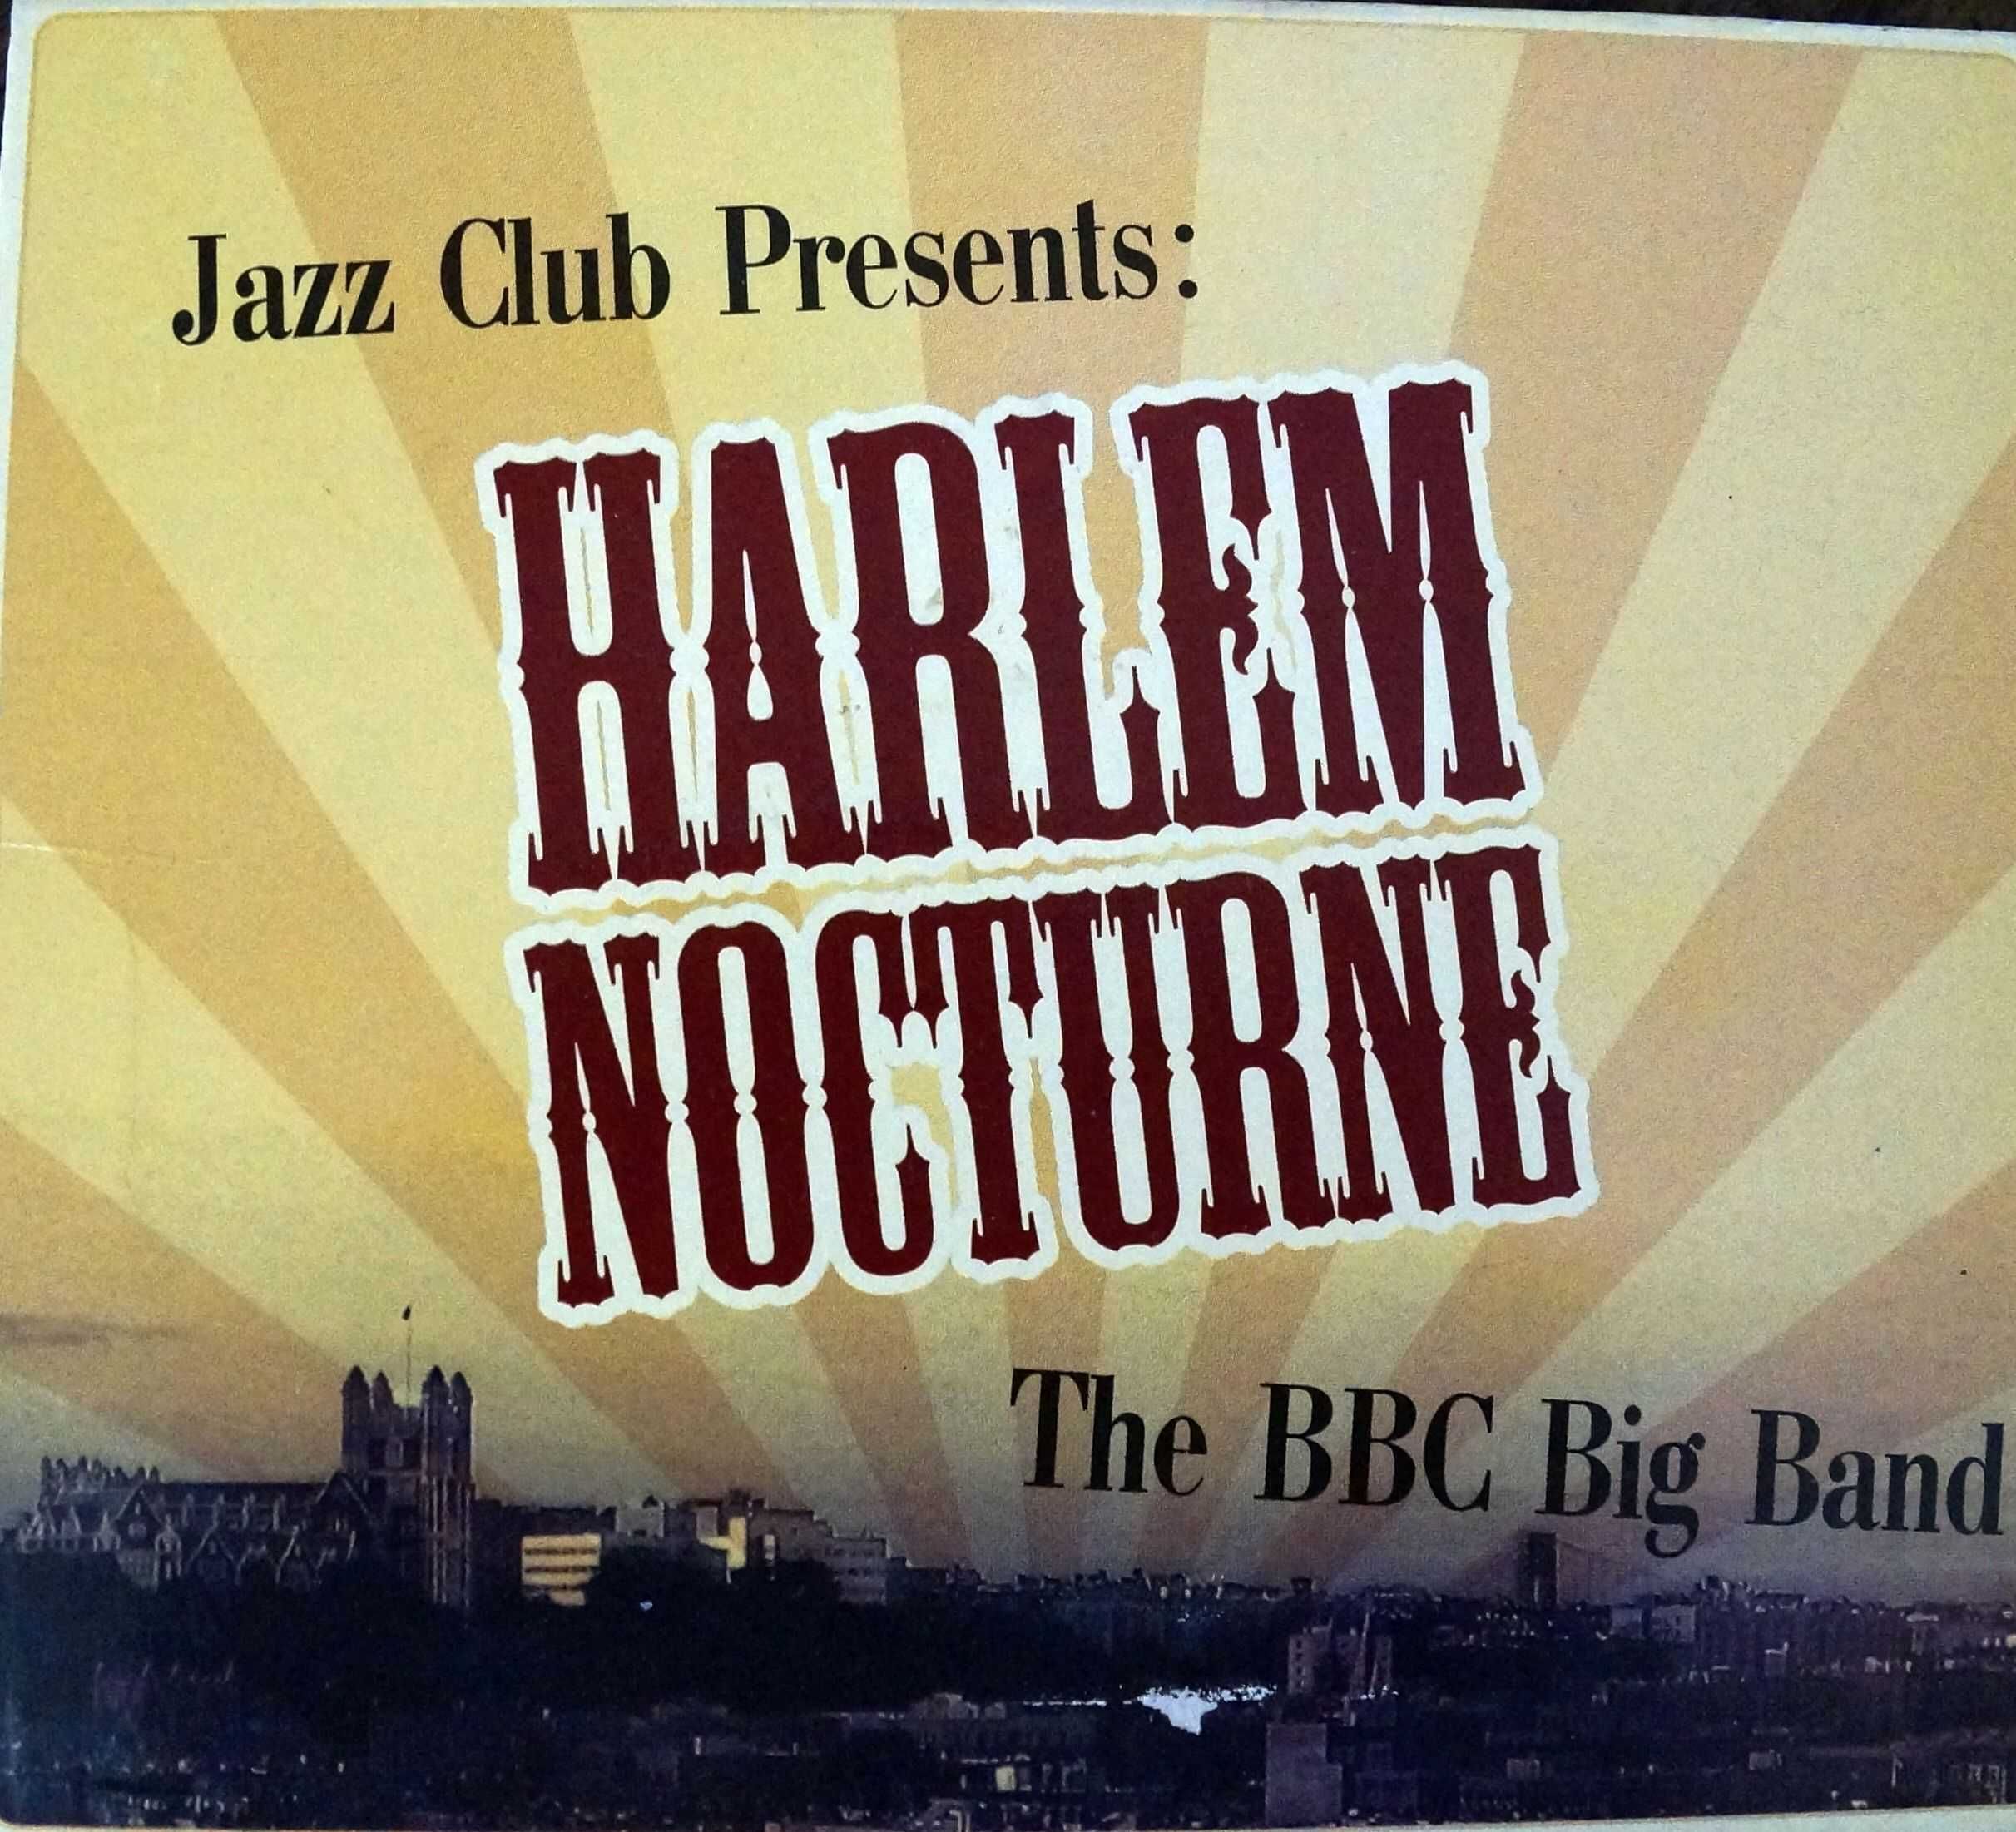 Jazz Club Presents: Harlem noturne - The BBC Big Band